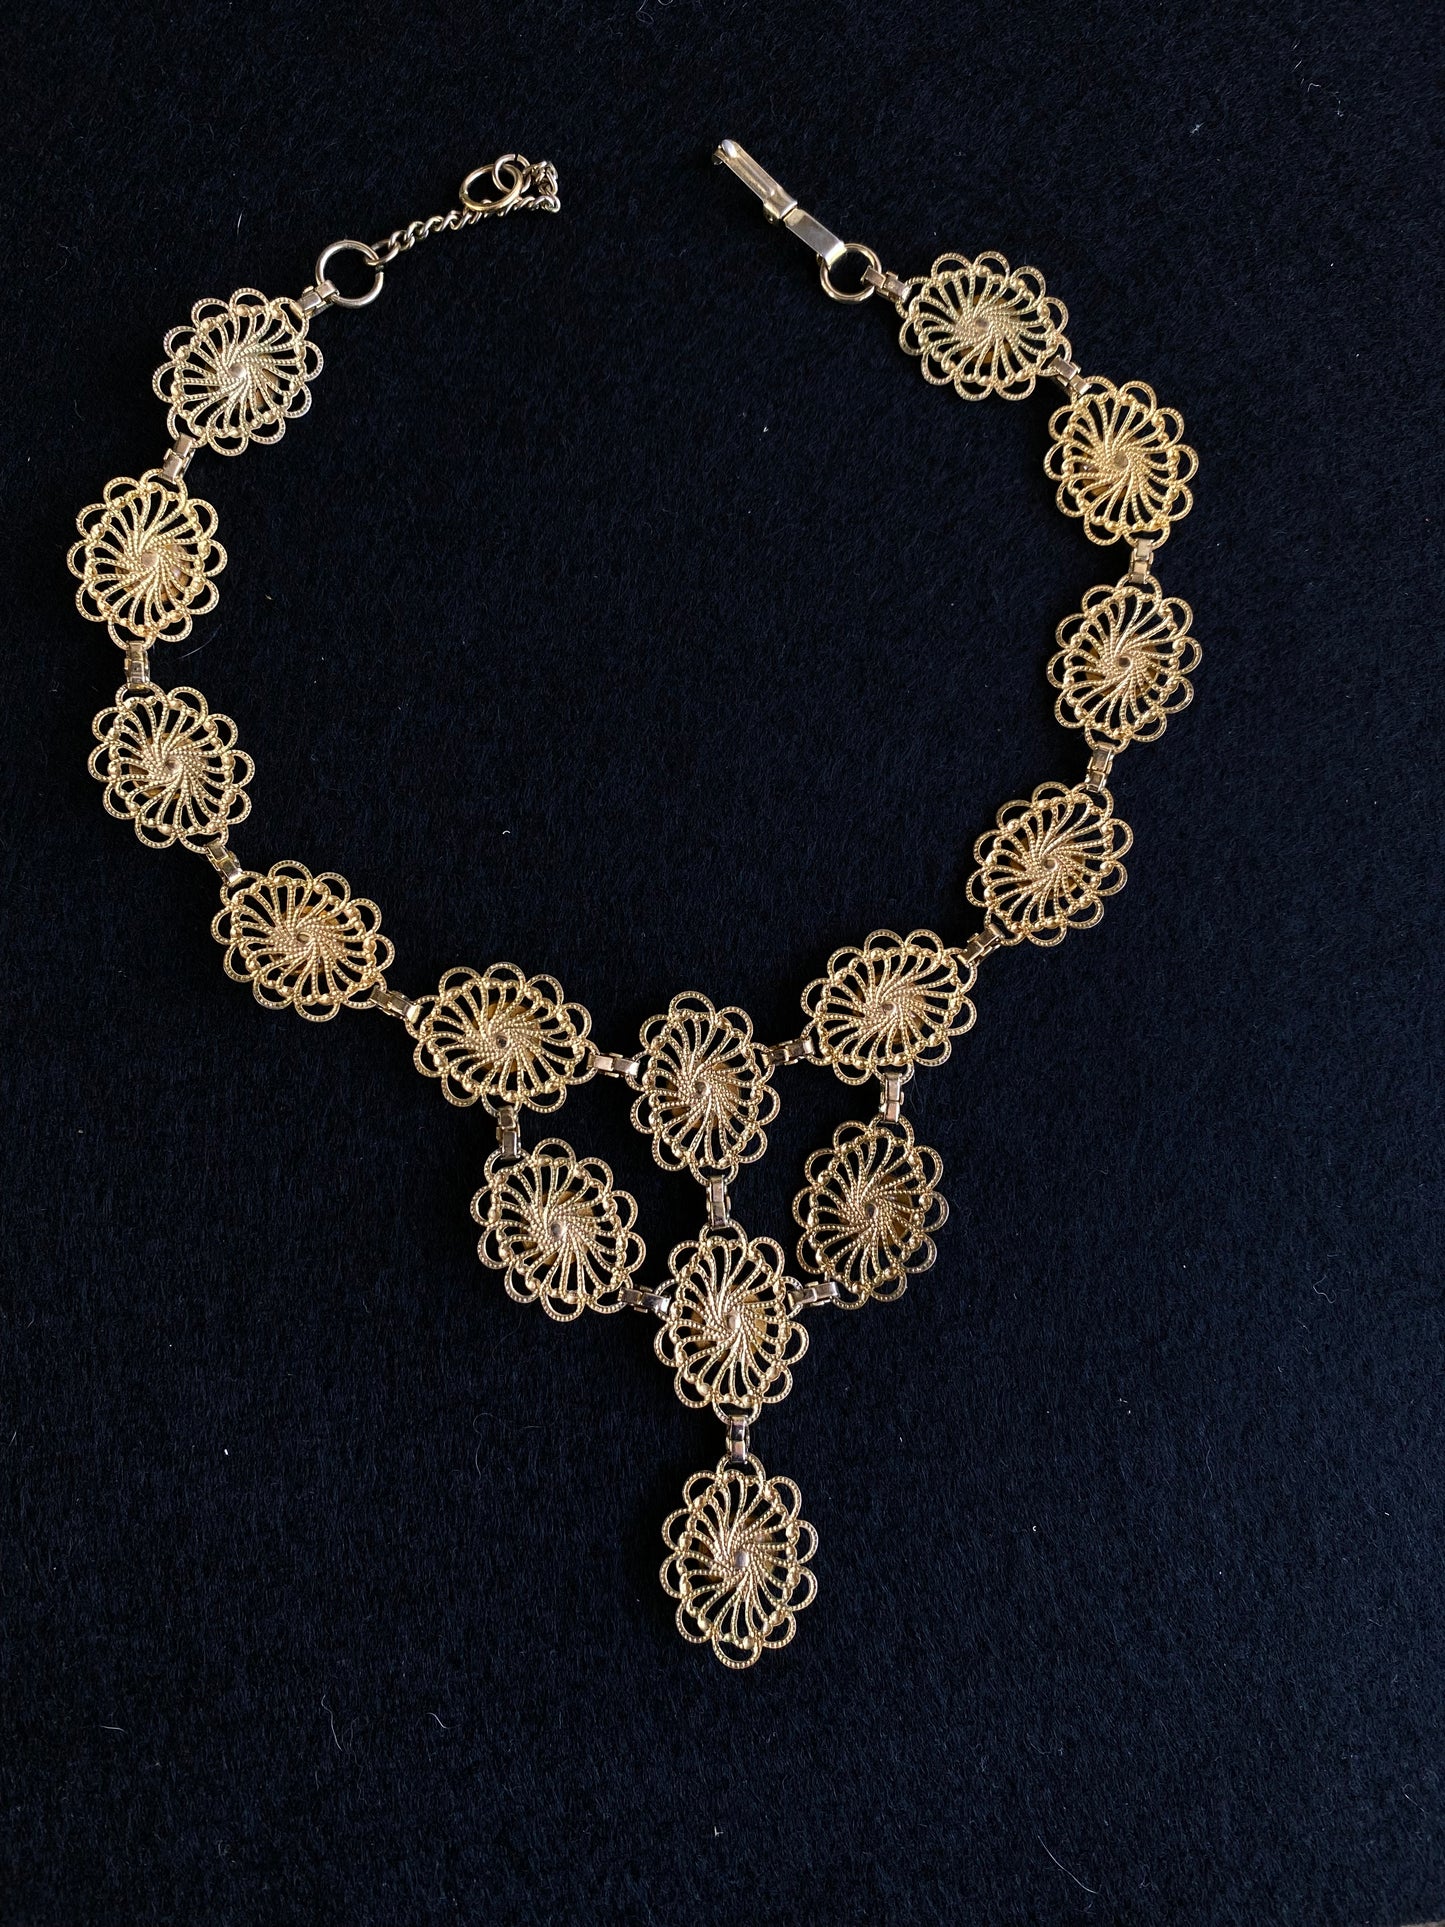 Vintage Costume jewellery necklace